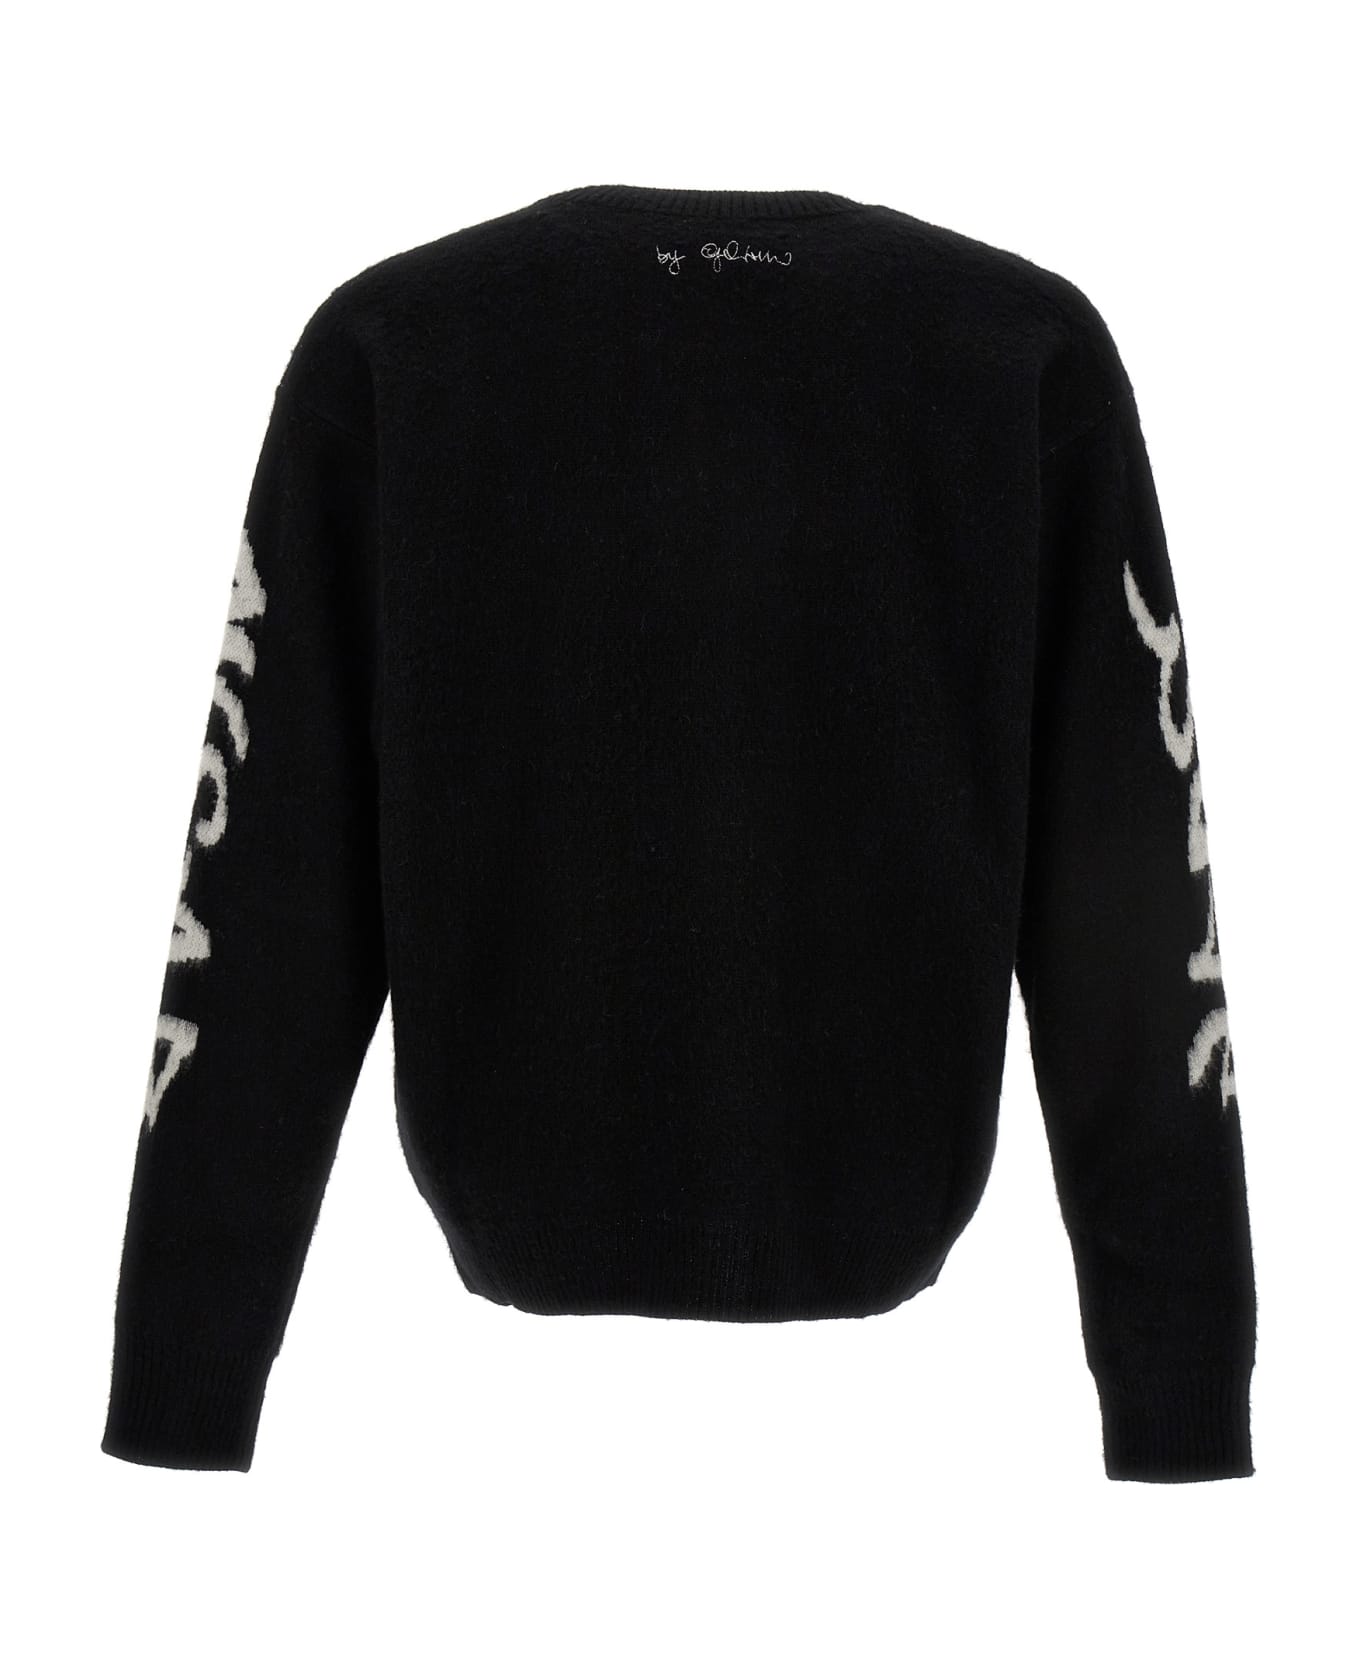 GCDS Logo Sweater - White/Black